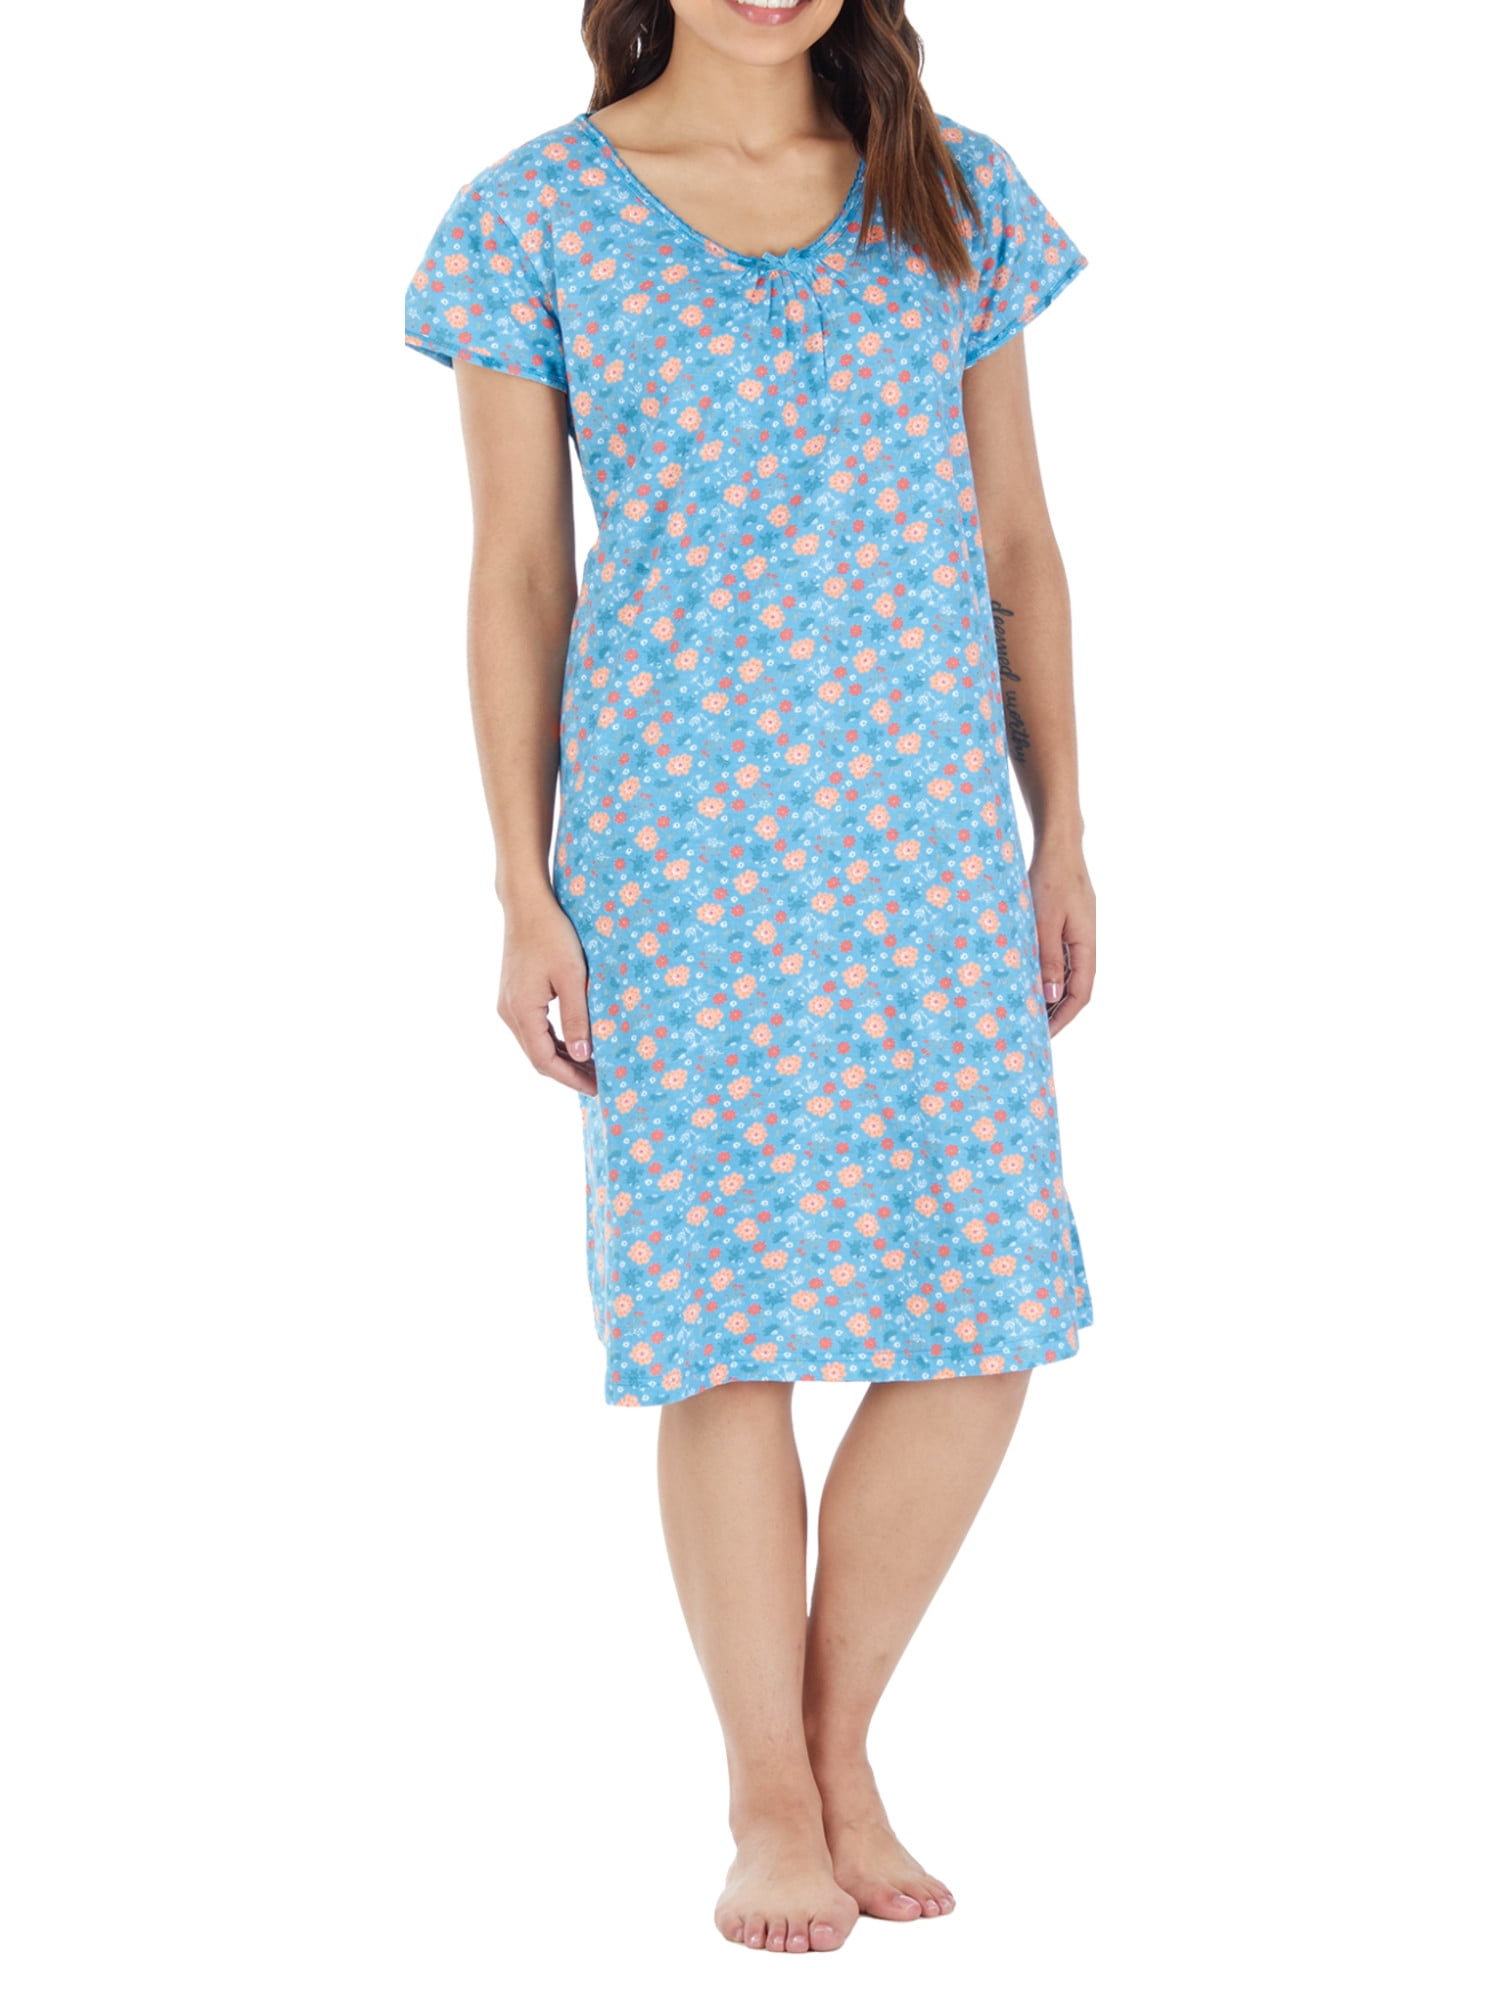 Sleepyheads Women's Cotton Short Sleeve Nightgown Sleep Dress Pajama ...